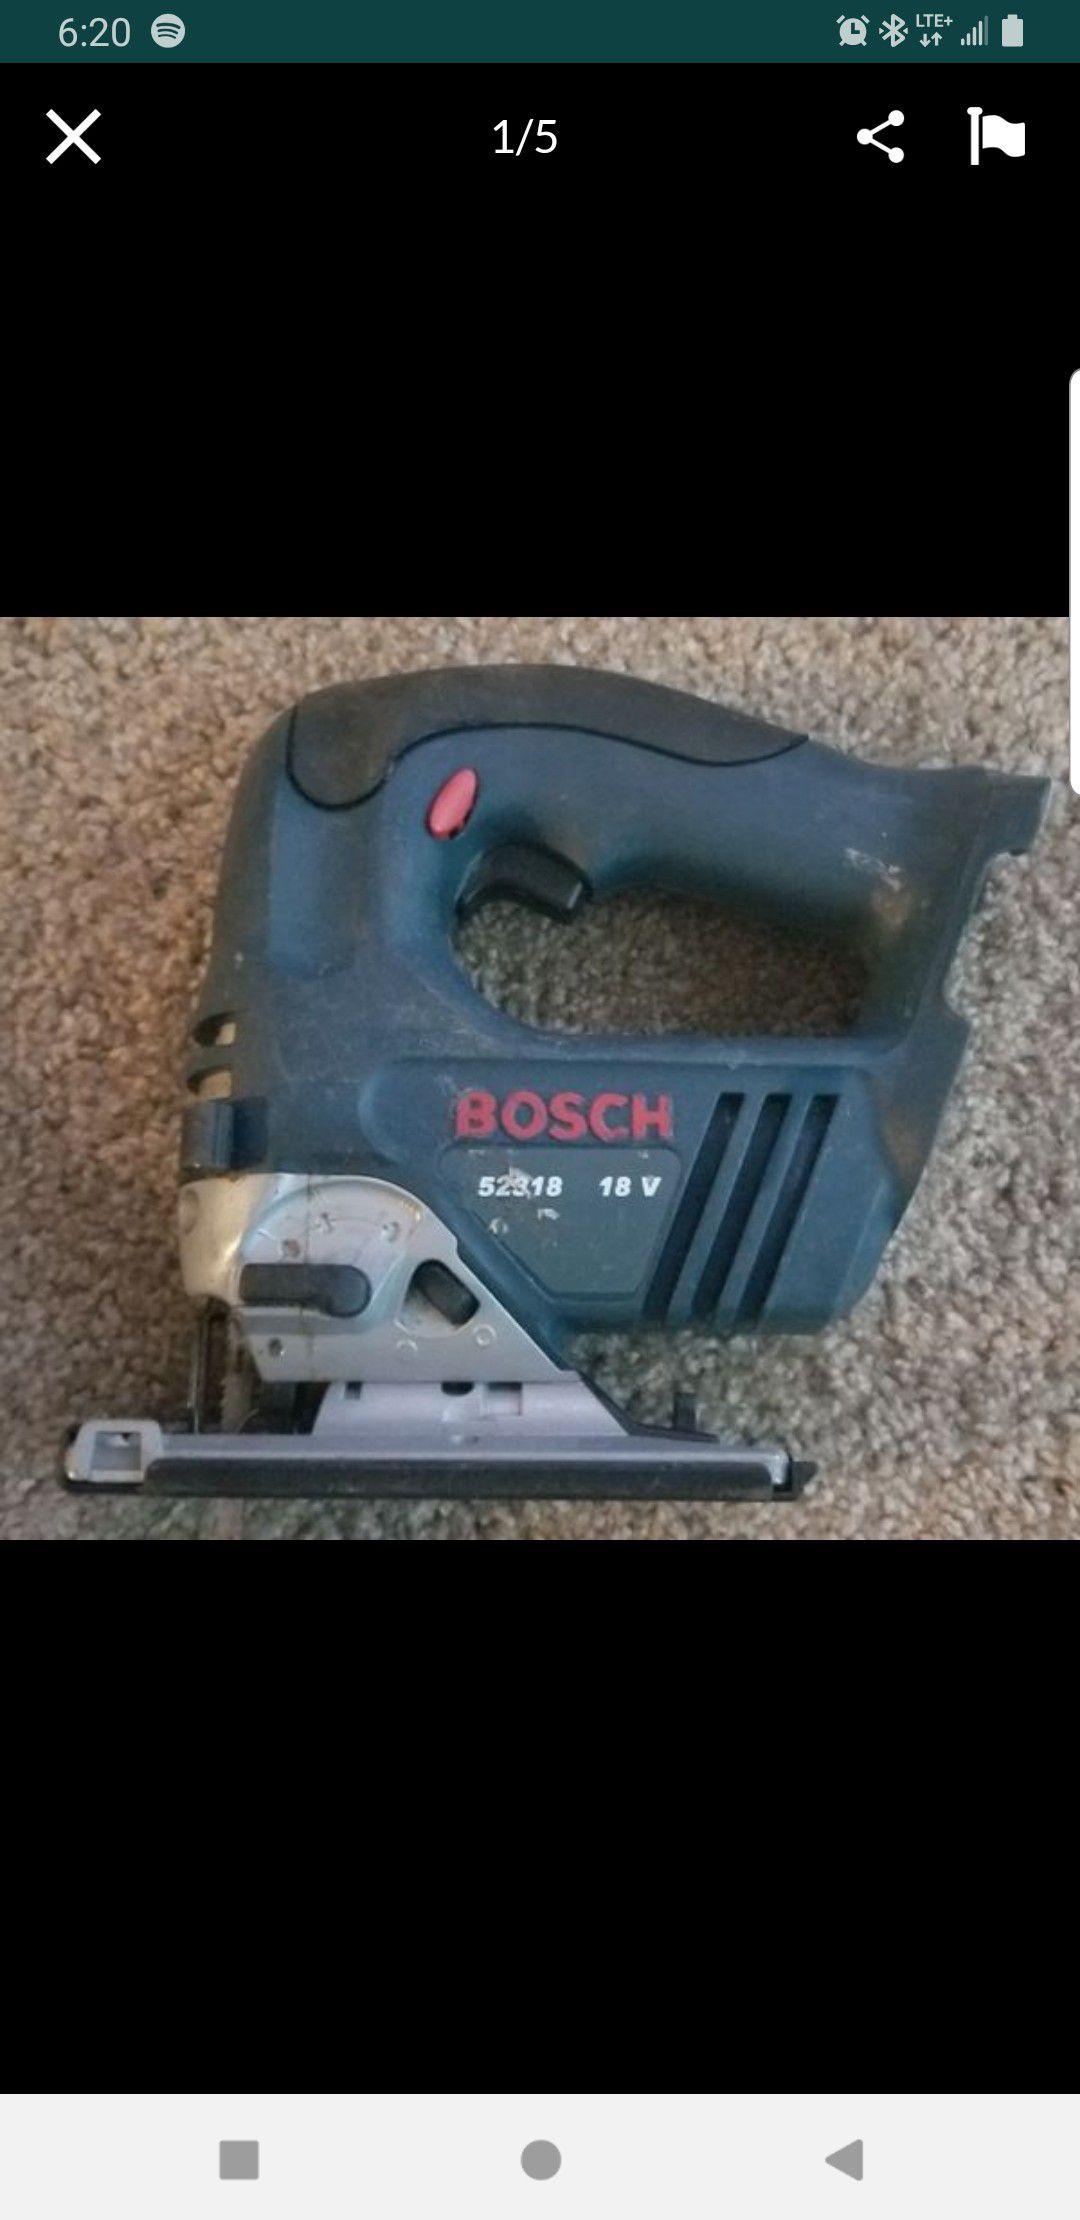 Bosch 18v power jigsaw